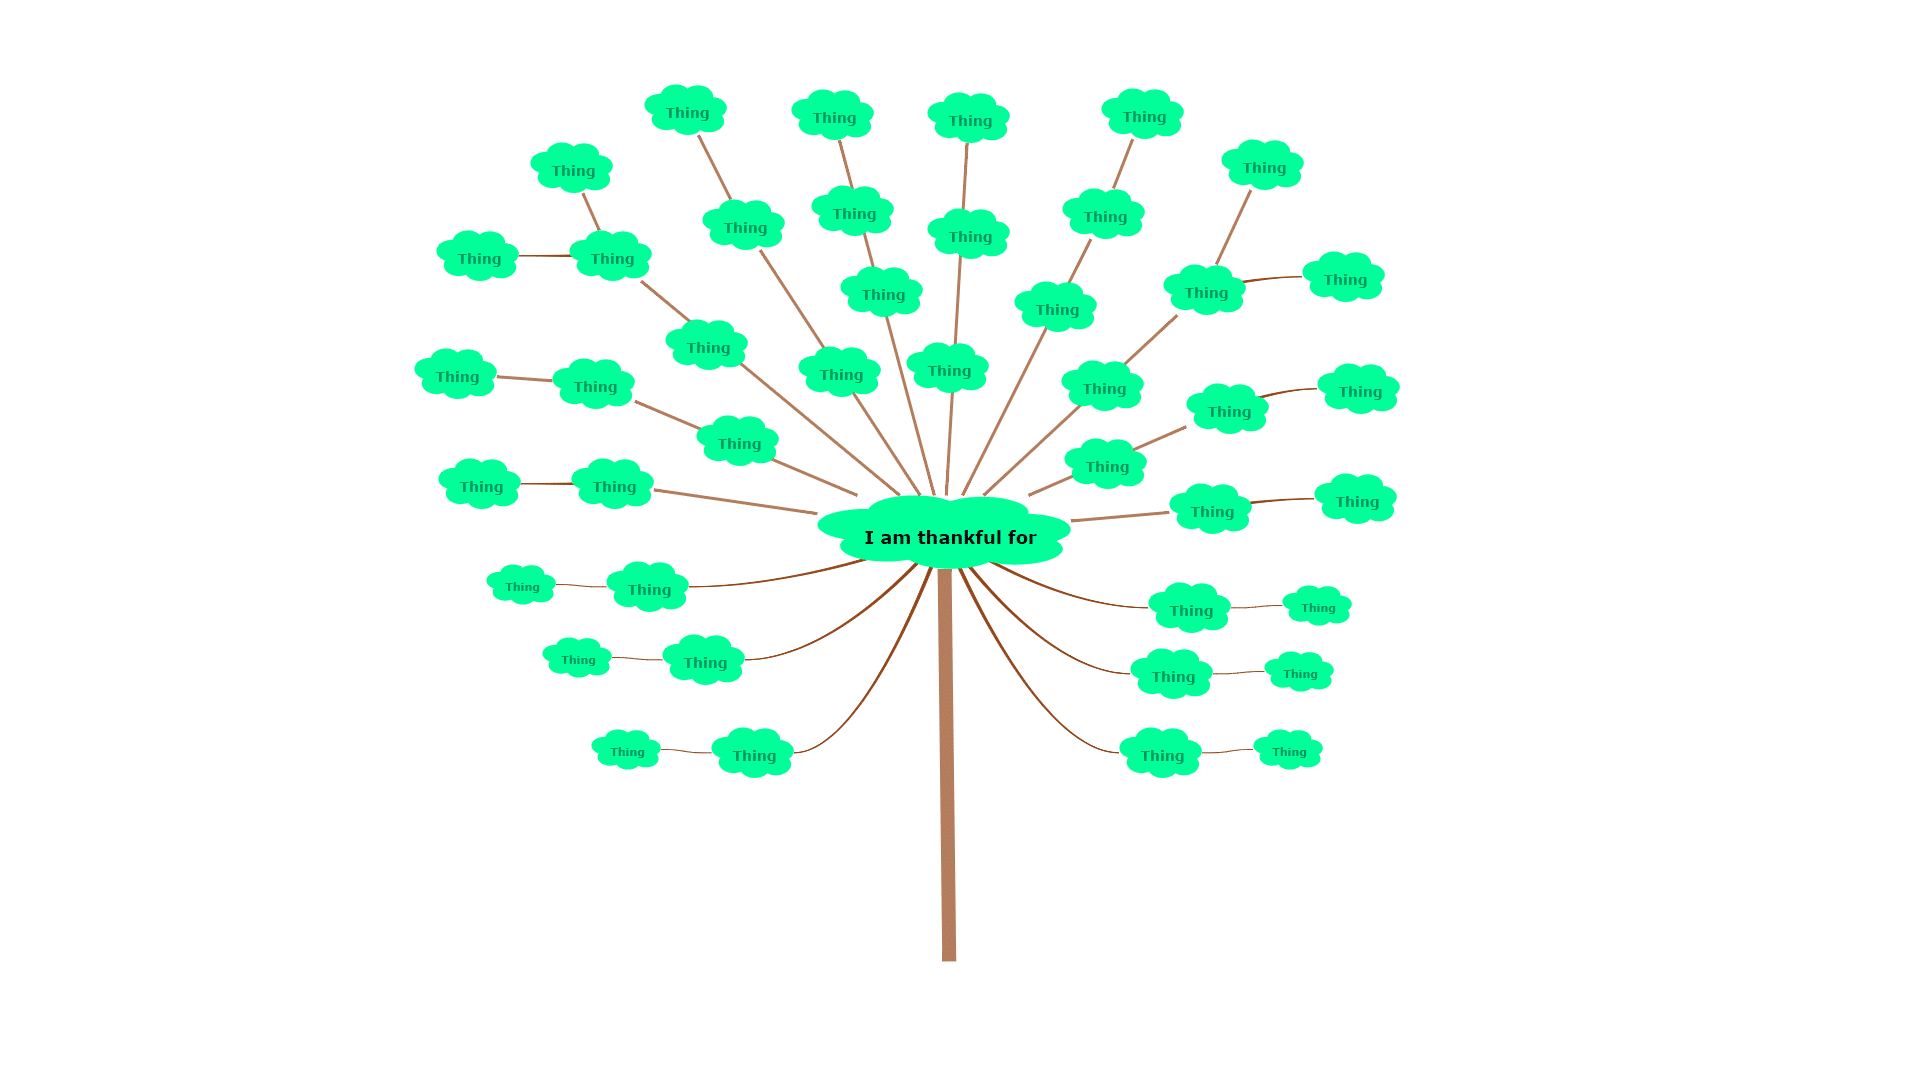 Thankful tree mind map example